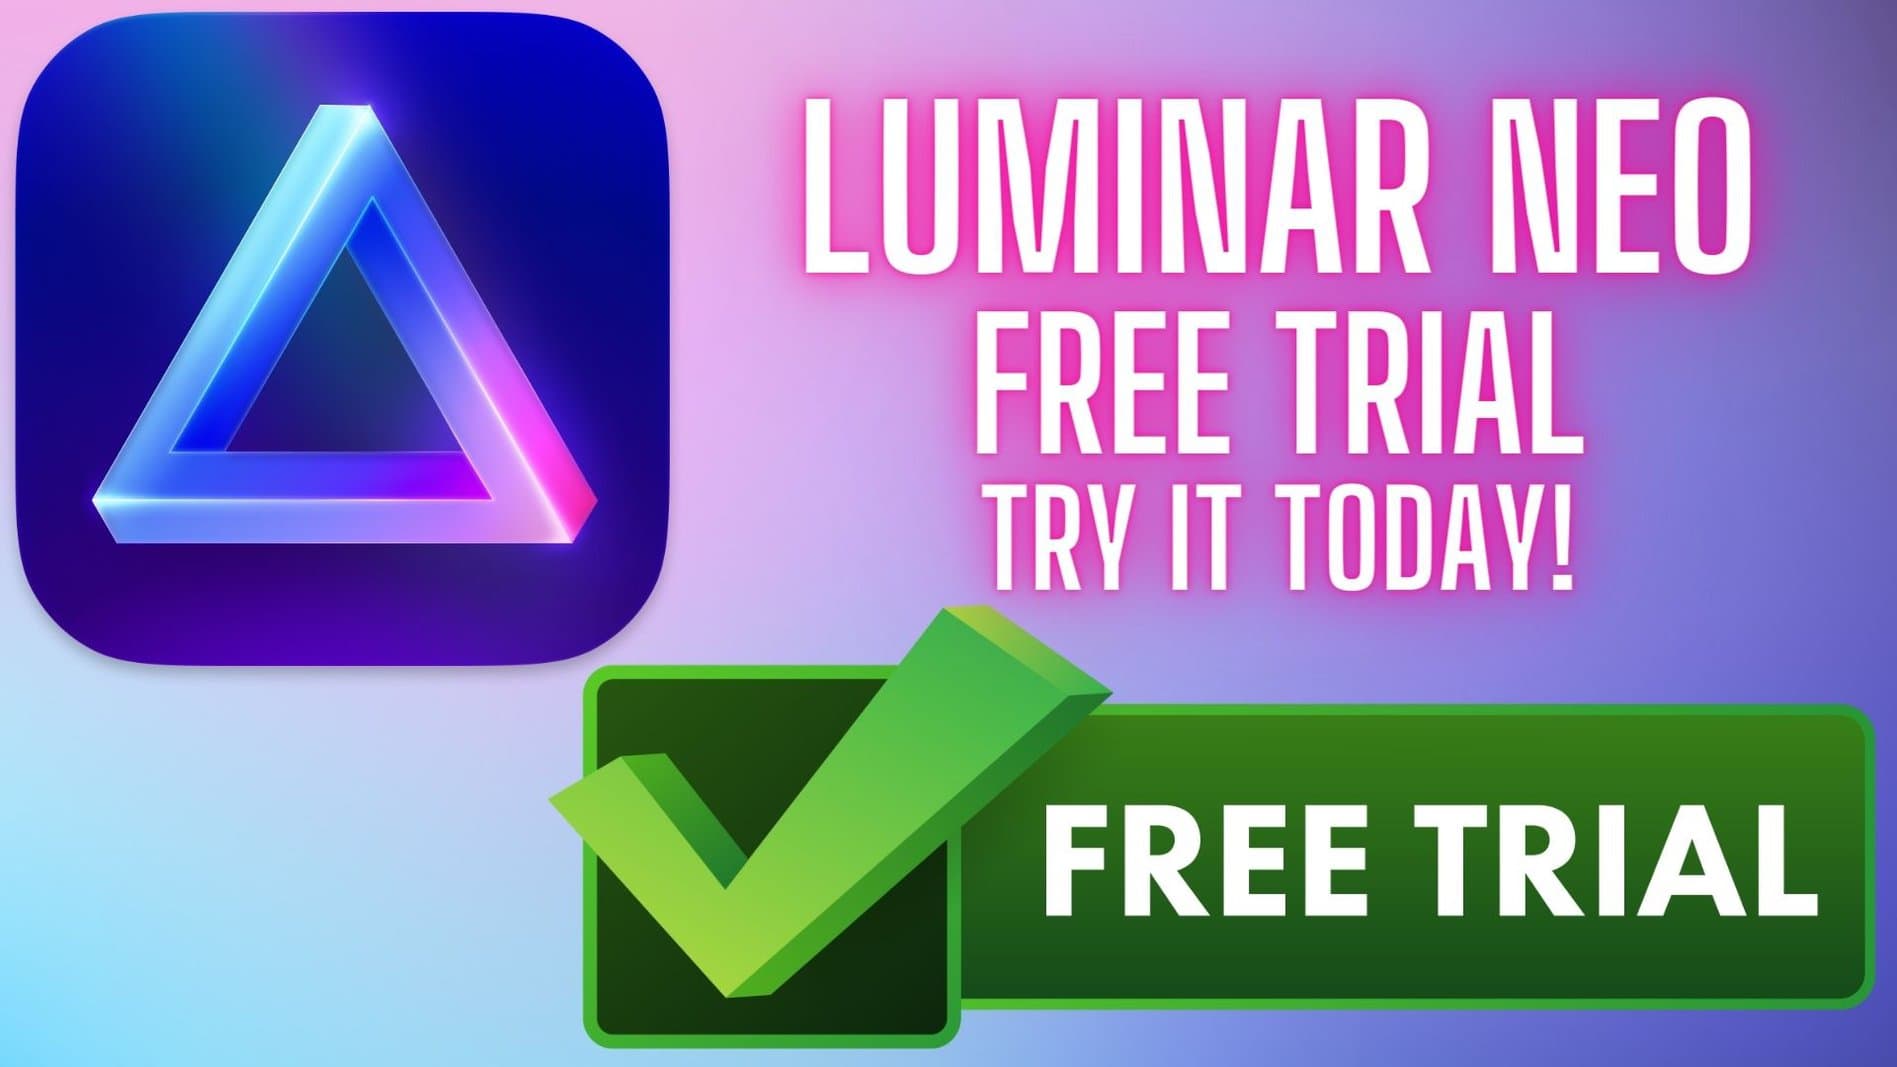 luminar Neo free trial